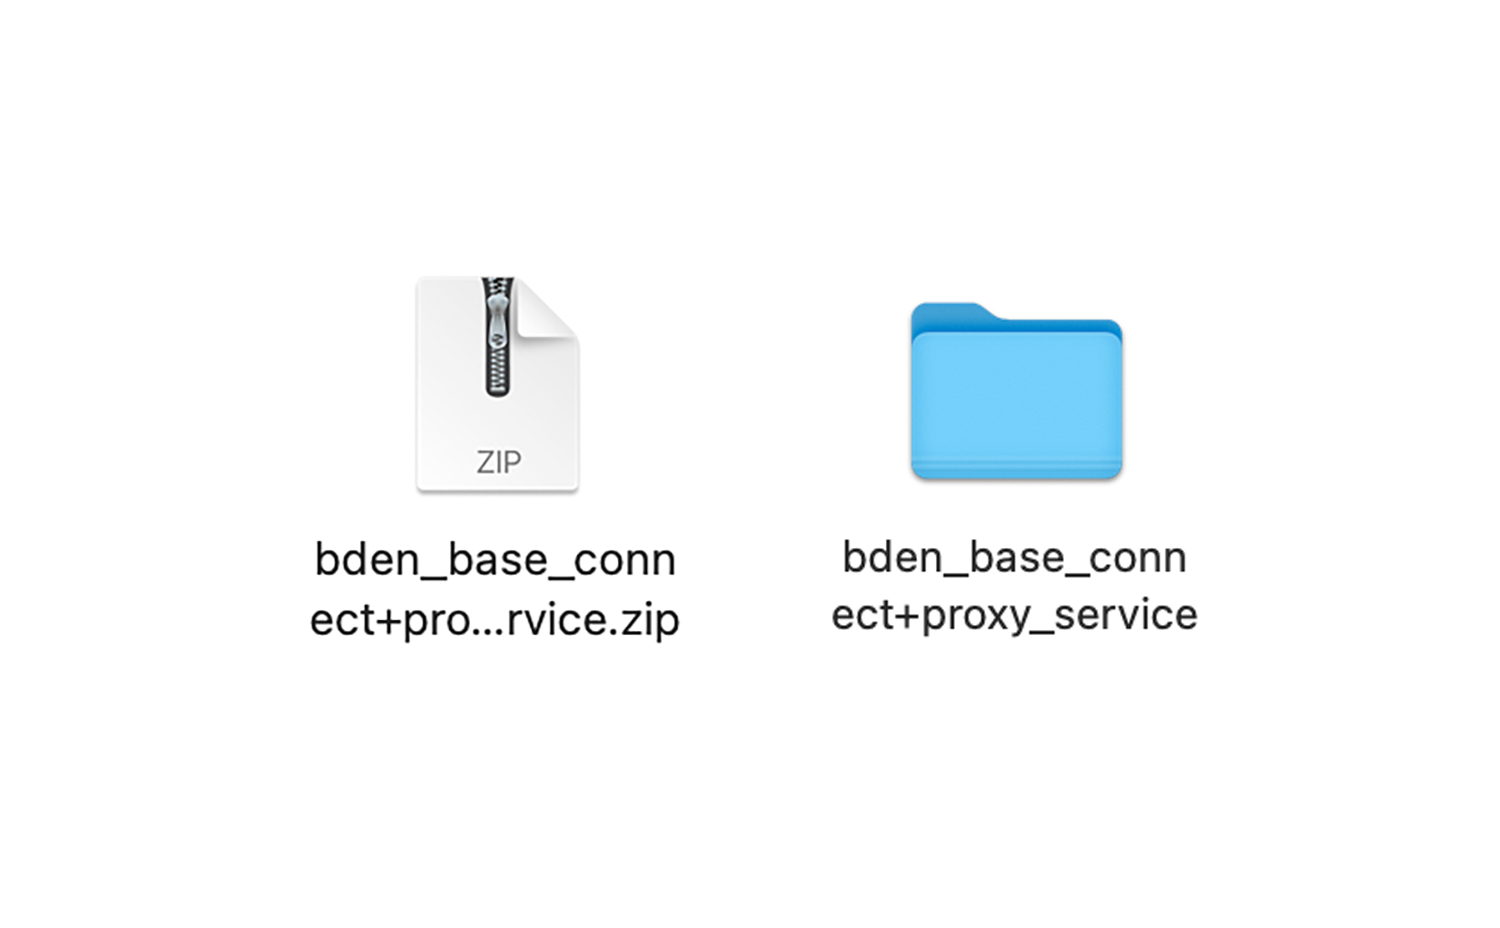 bden_base_connect+proxy_service.zipファイルを解凍する